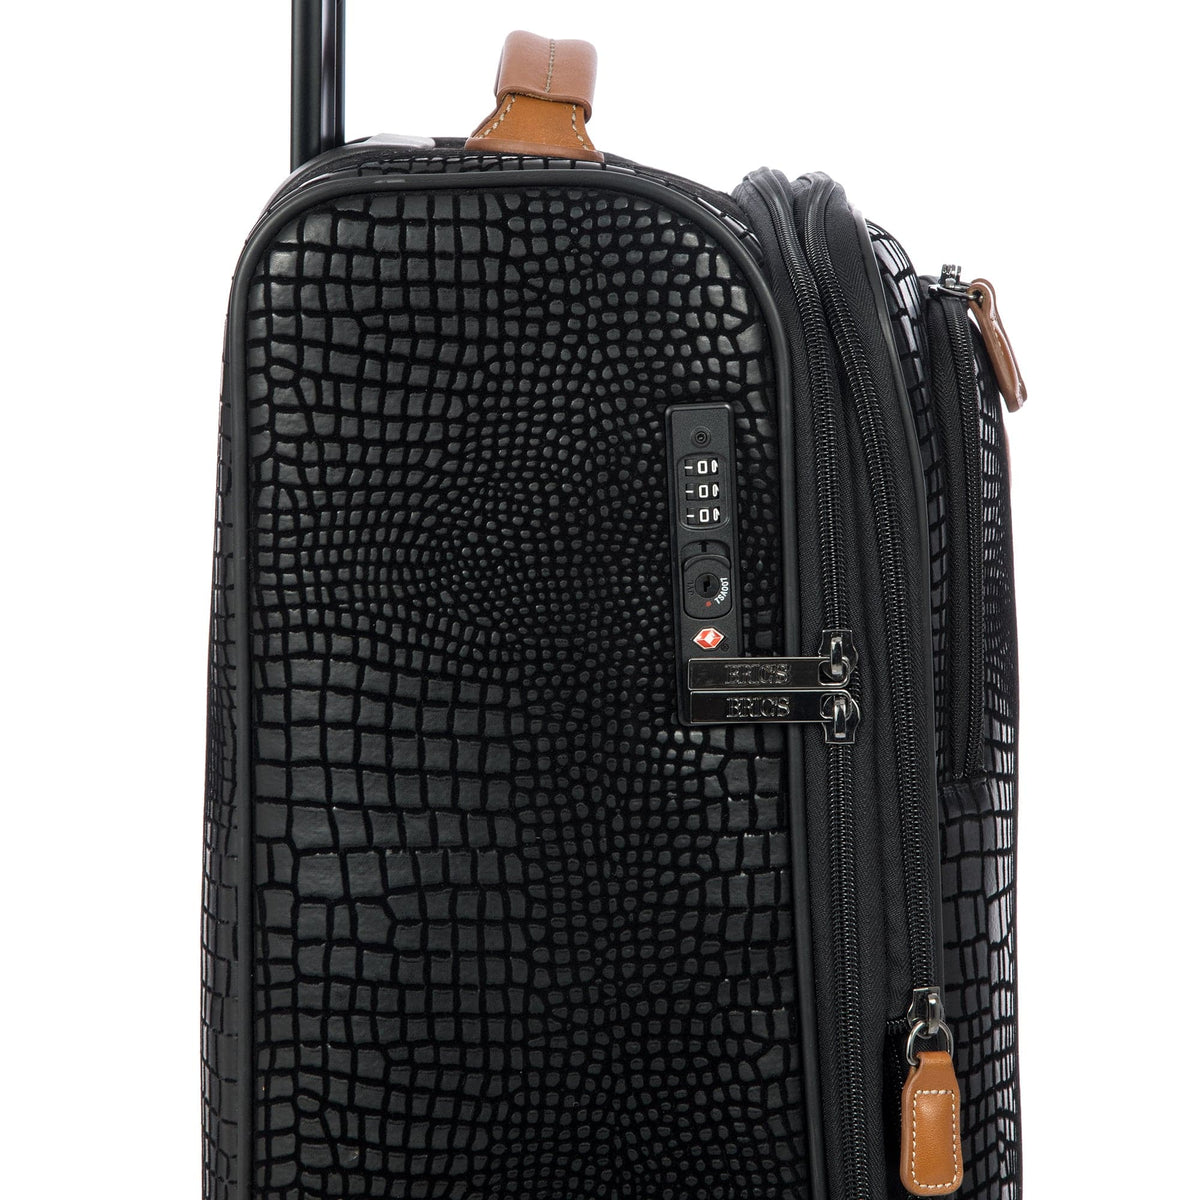 Bric's Mysafari 21" Expandable Spinner Luggage